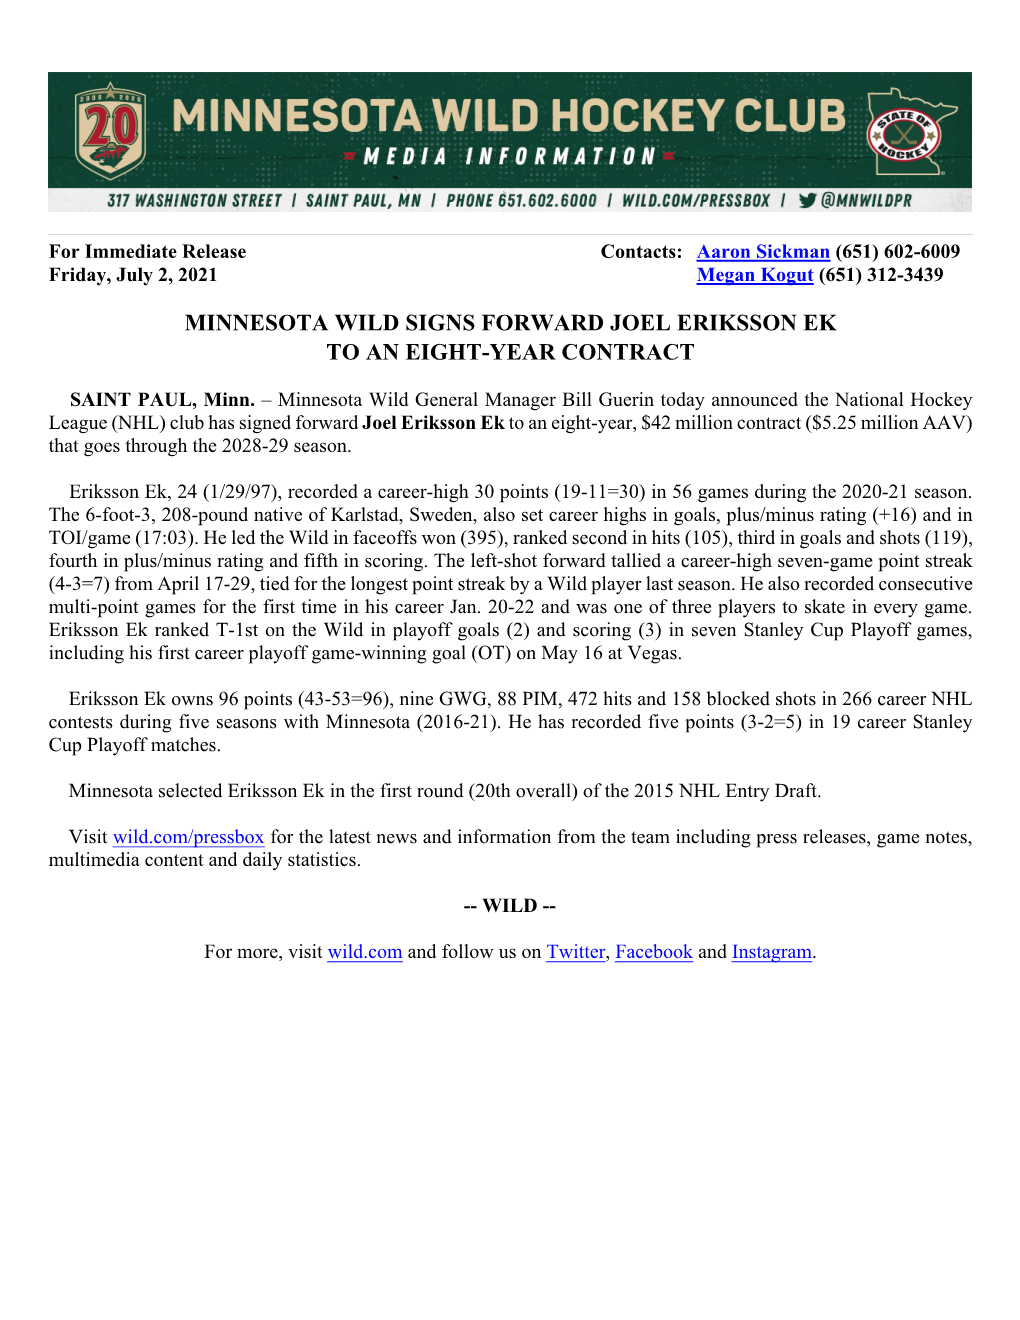 Minnesota Wild Signs Forward Joel Erisson Ek to an Eight-Year Contract